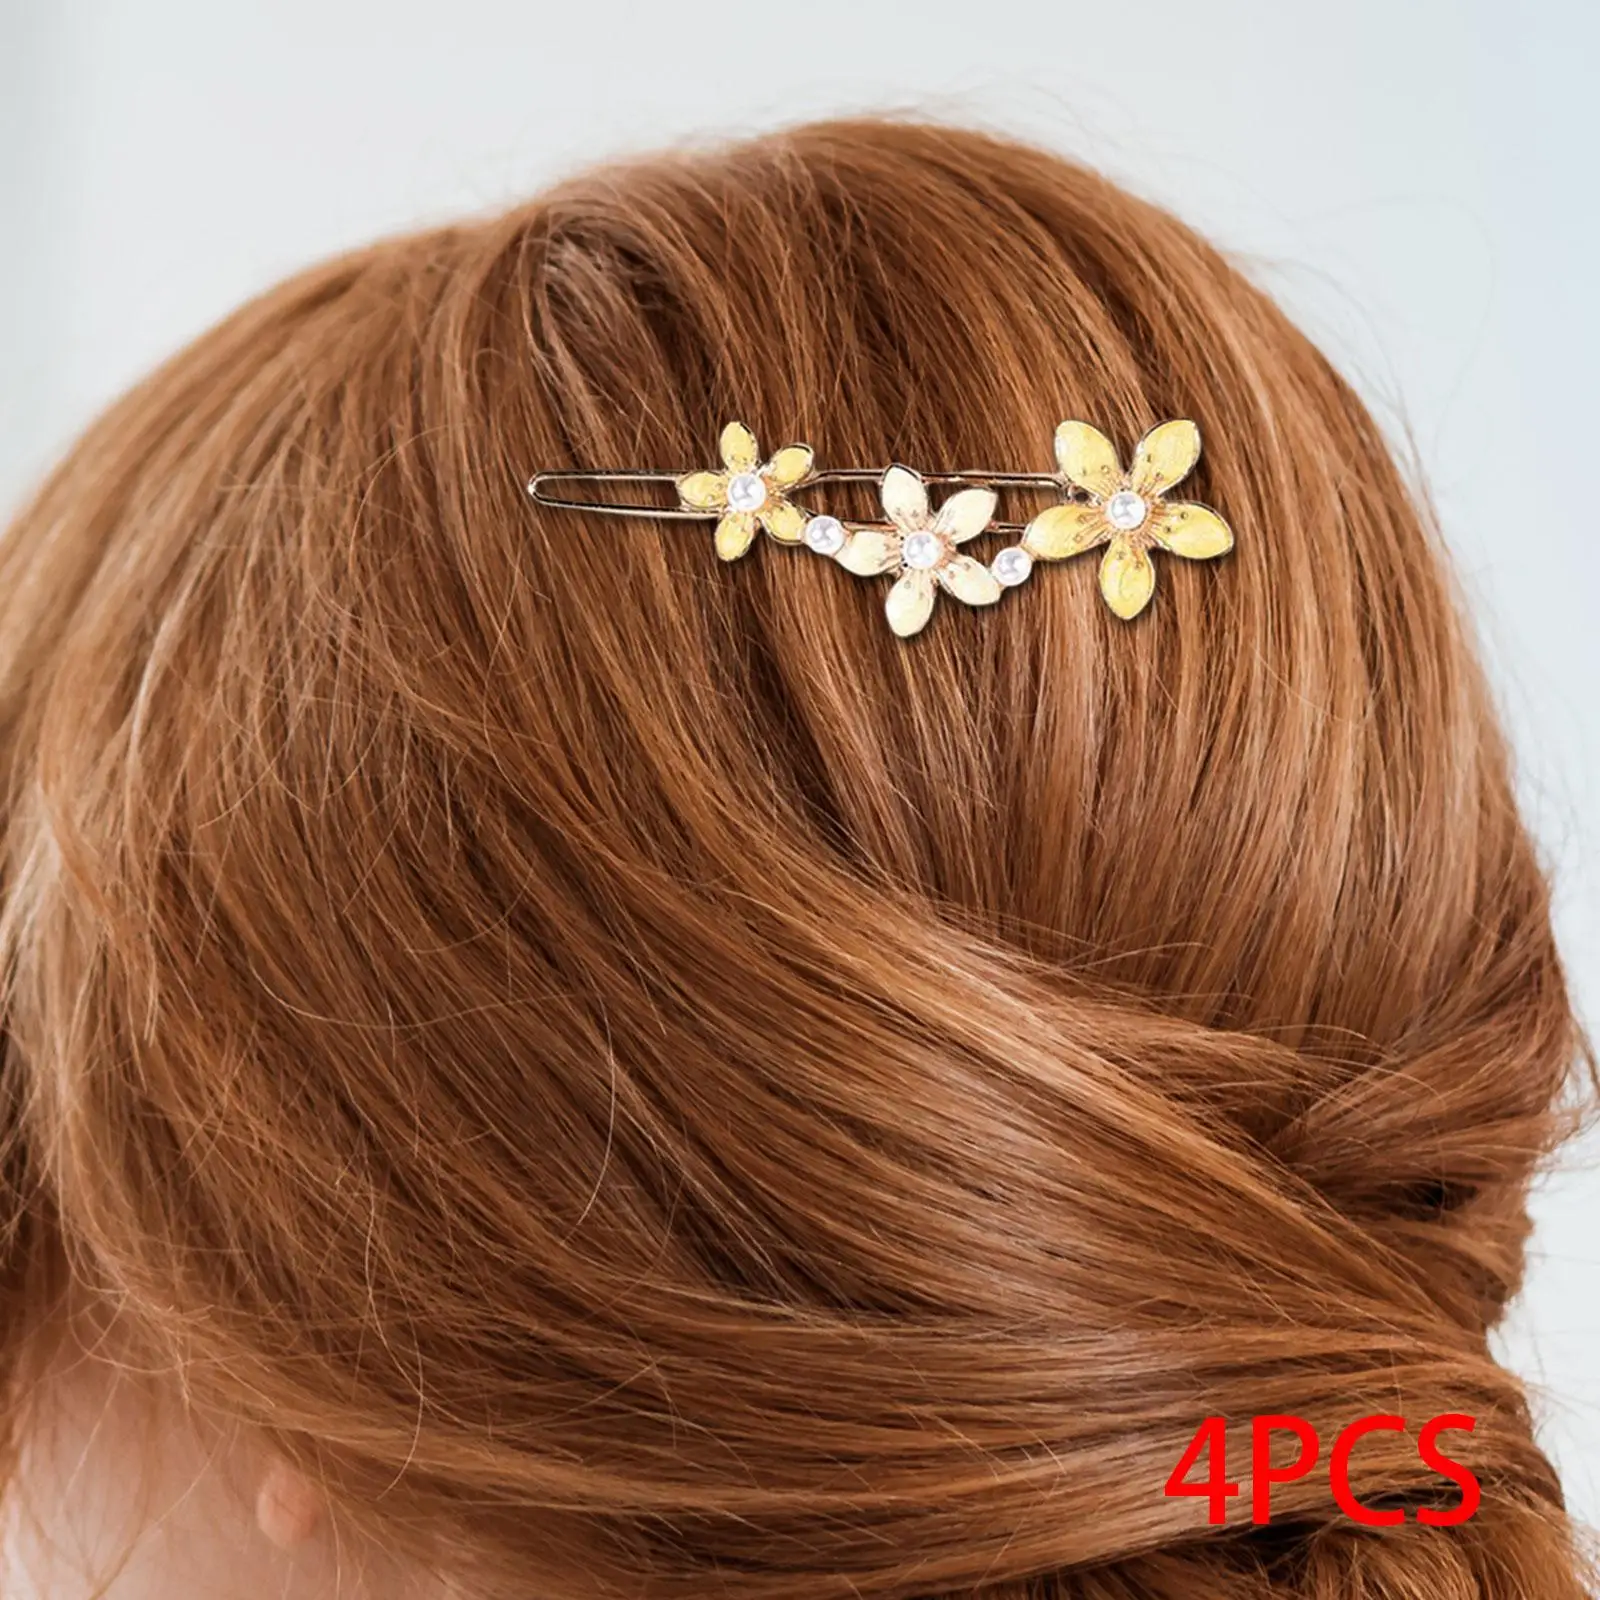 4Pcs Enamel Flower Hair Clips Hair Jewelry Headwear Gift Hair Pins for Party